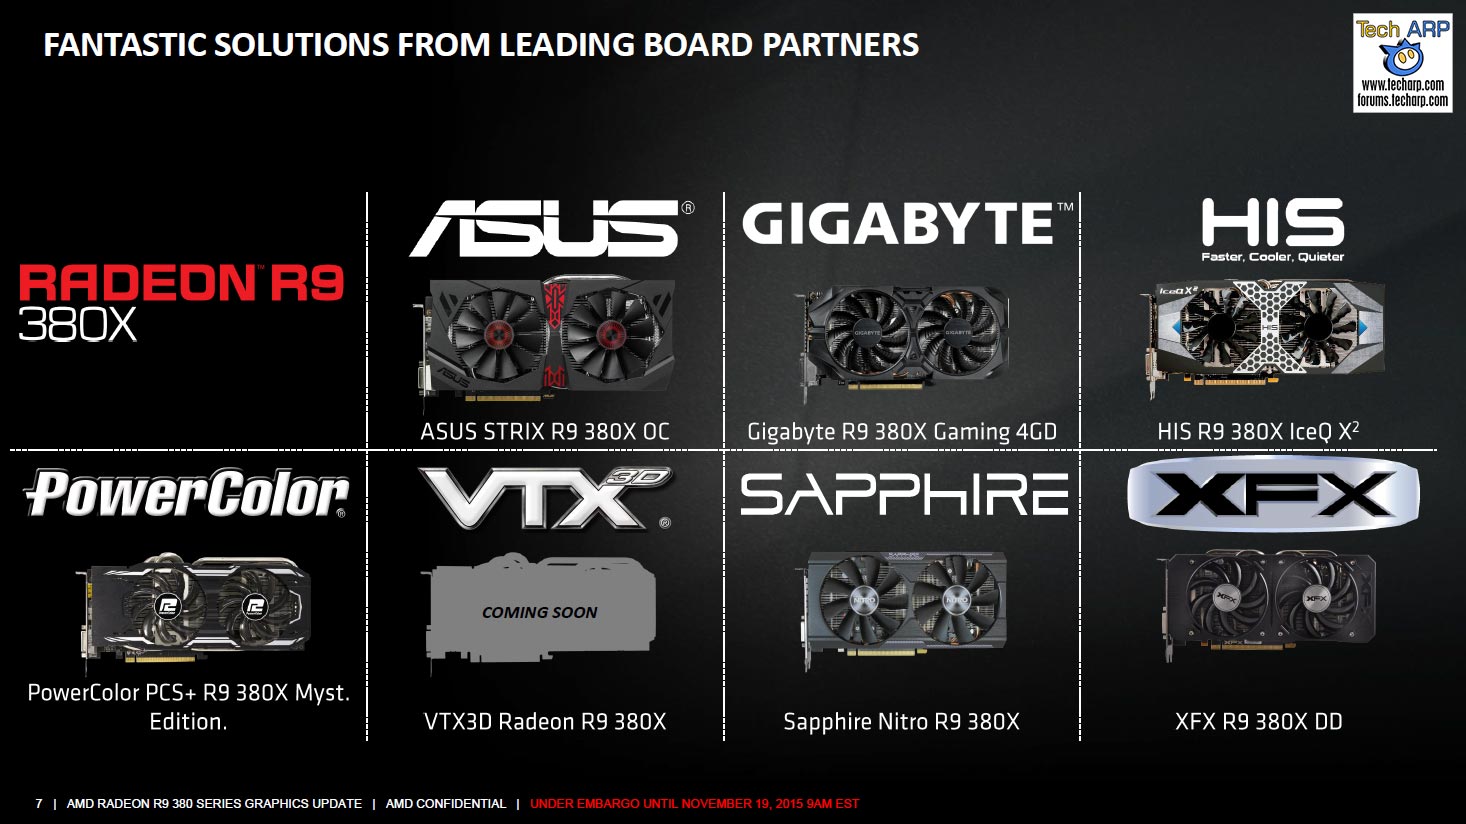 AMD Radeon R9 380X Technology Report